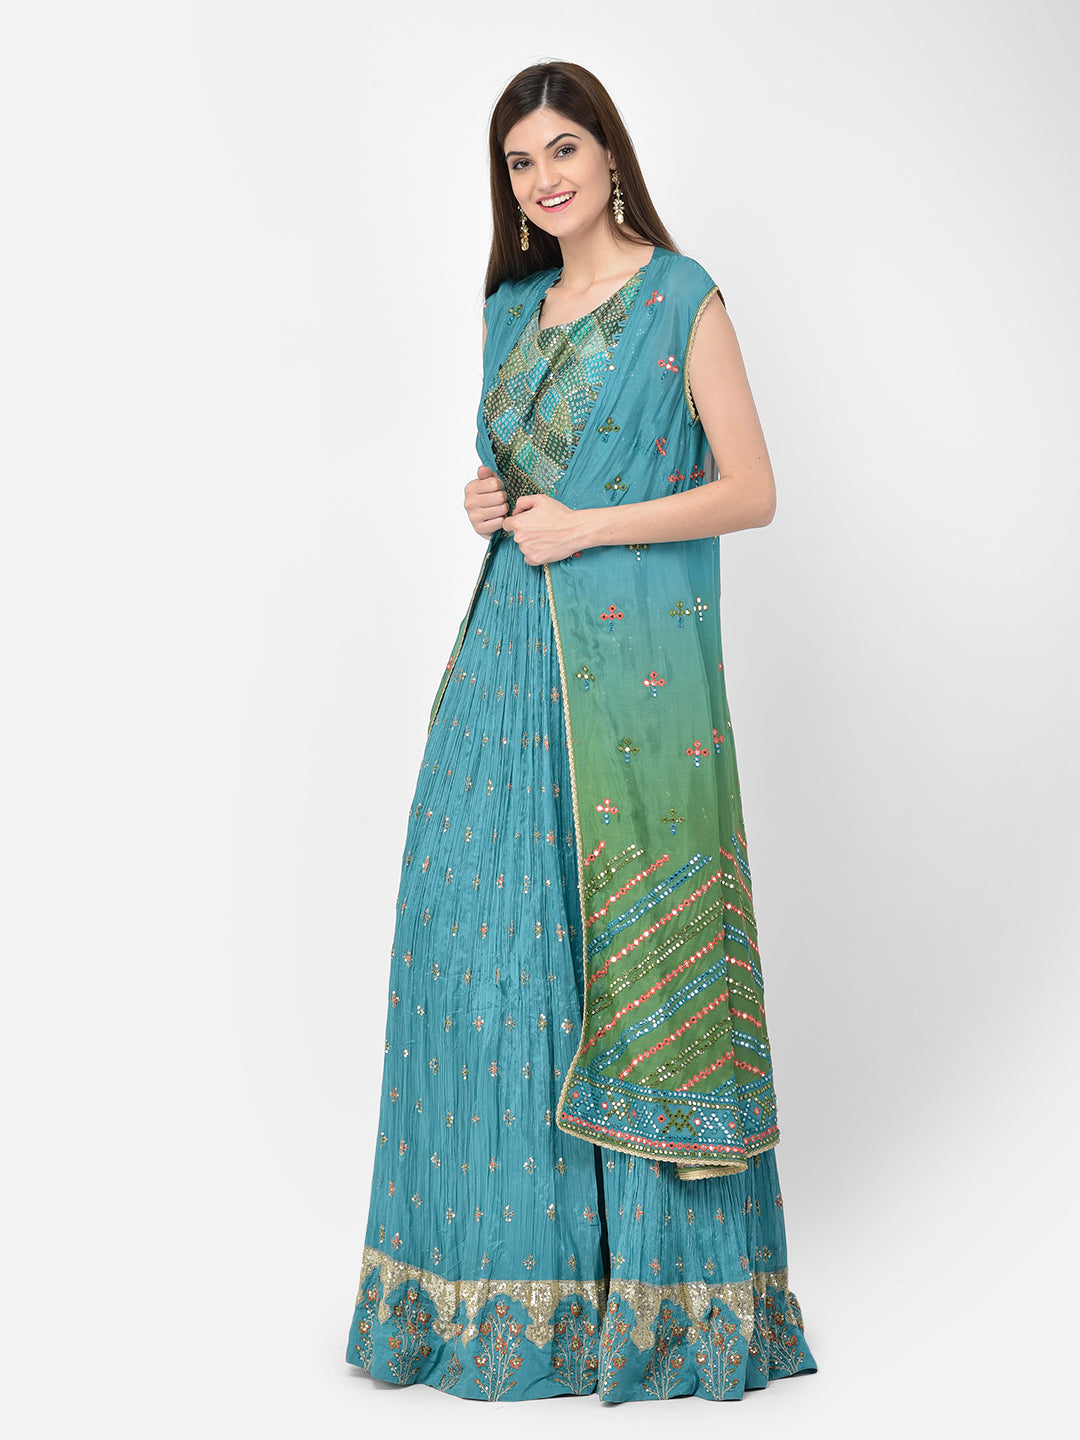 Neeru's'S Green Color Georgette Fabric Suit-Anarkali